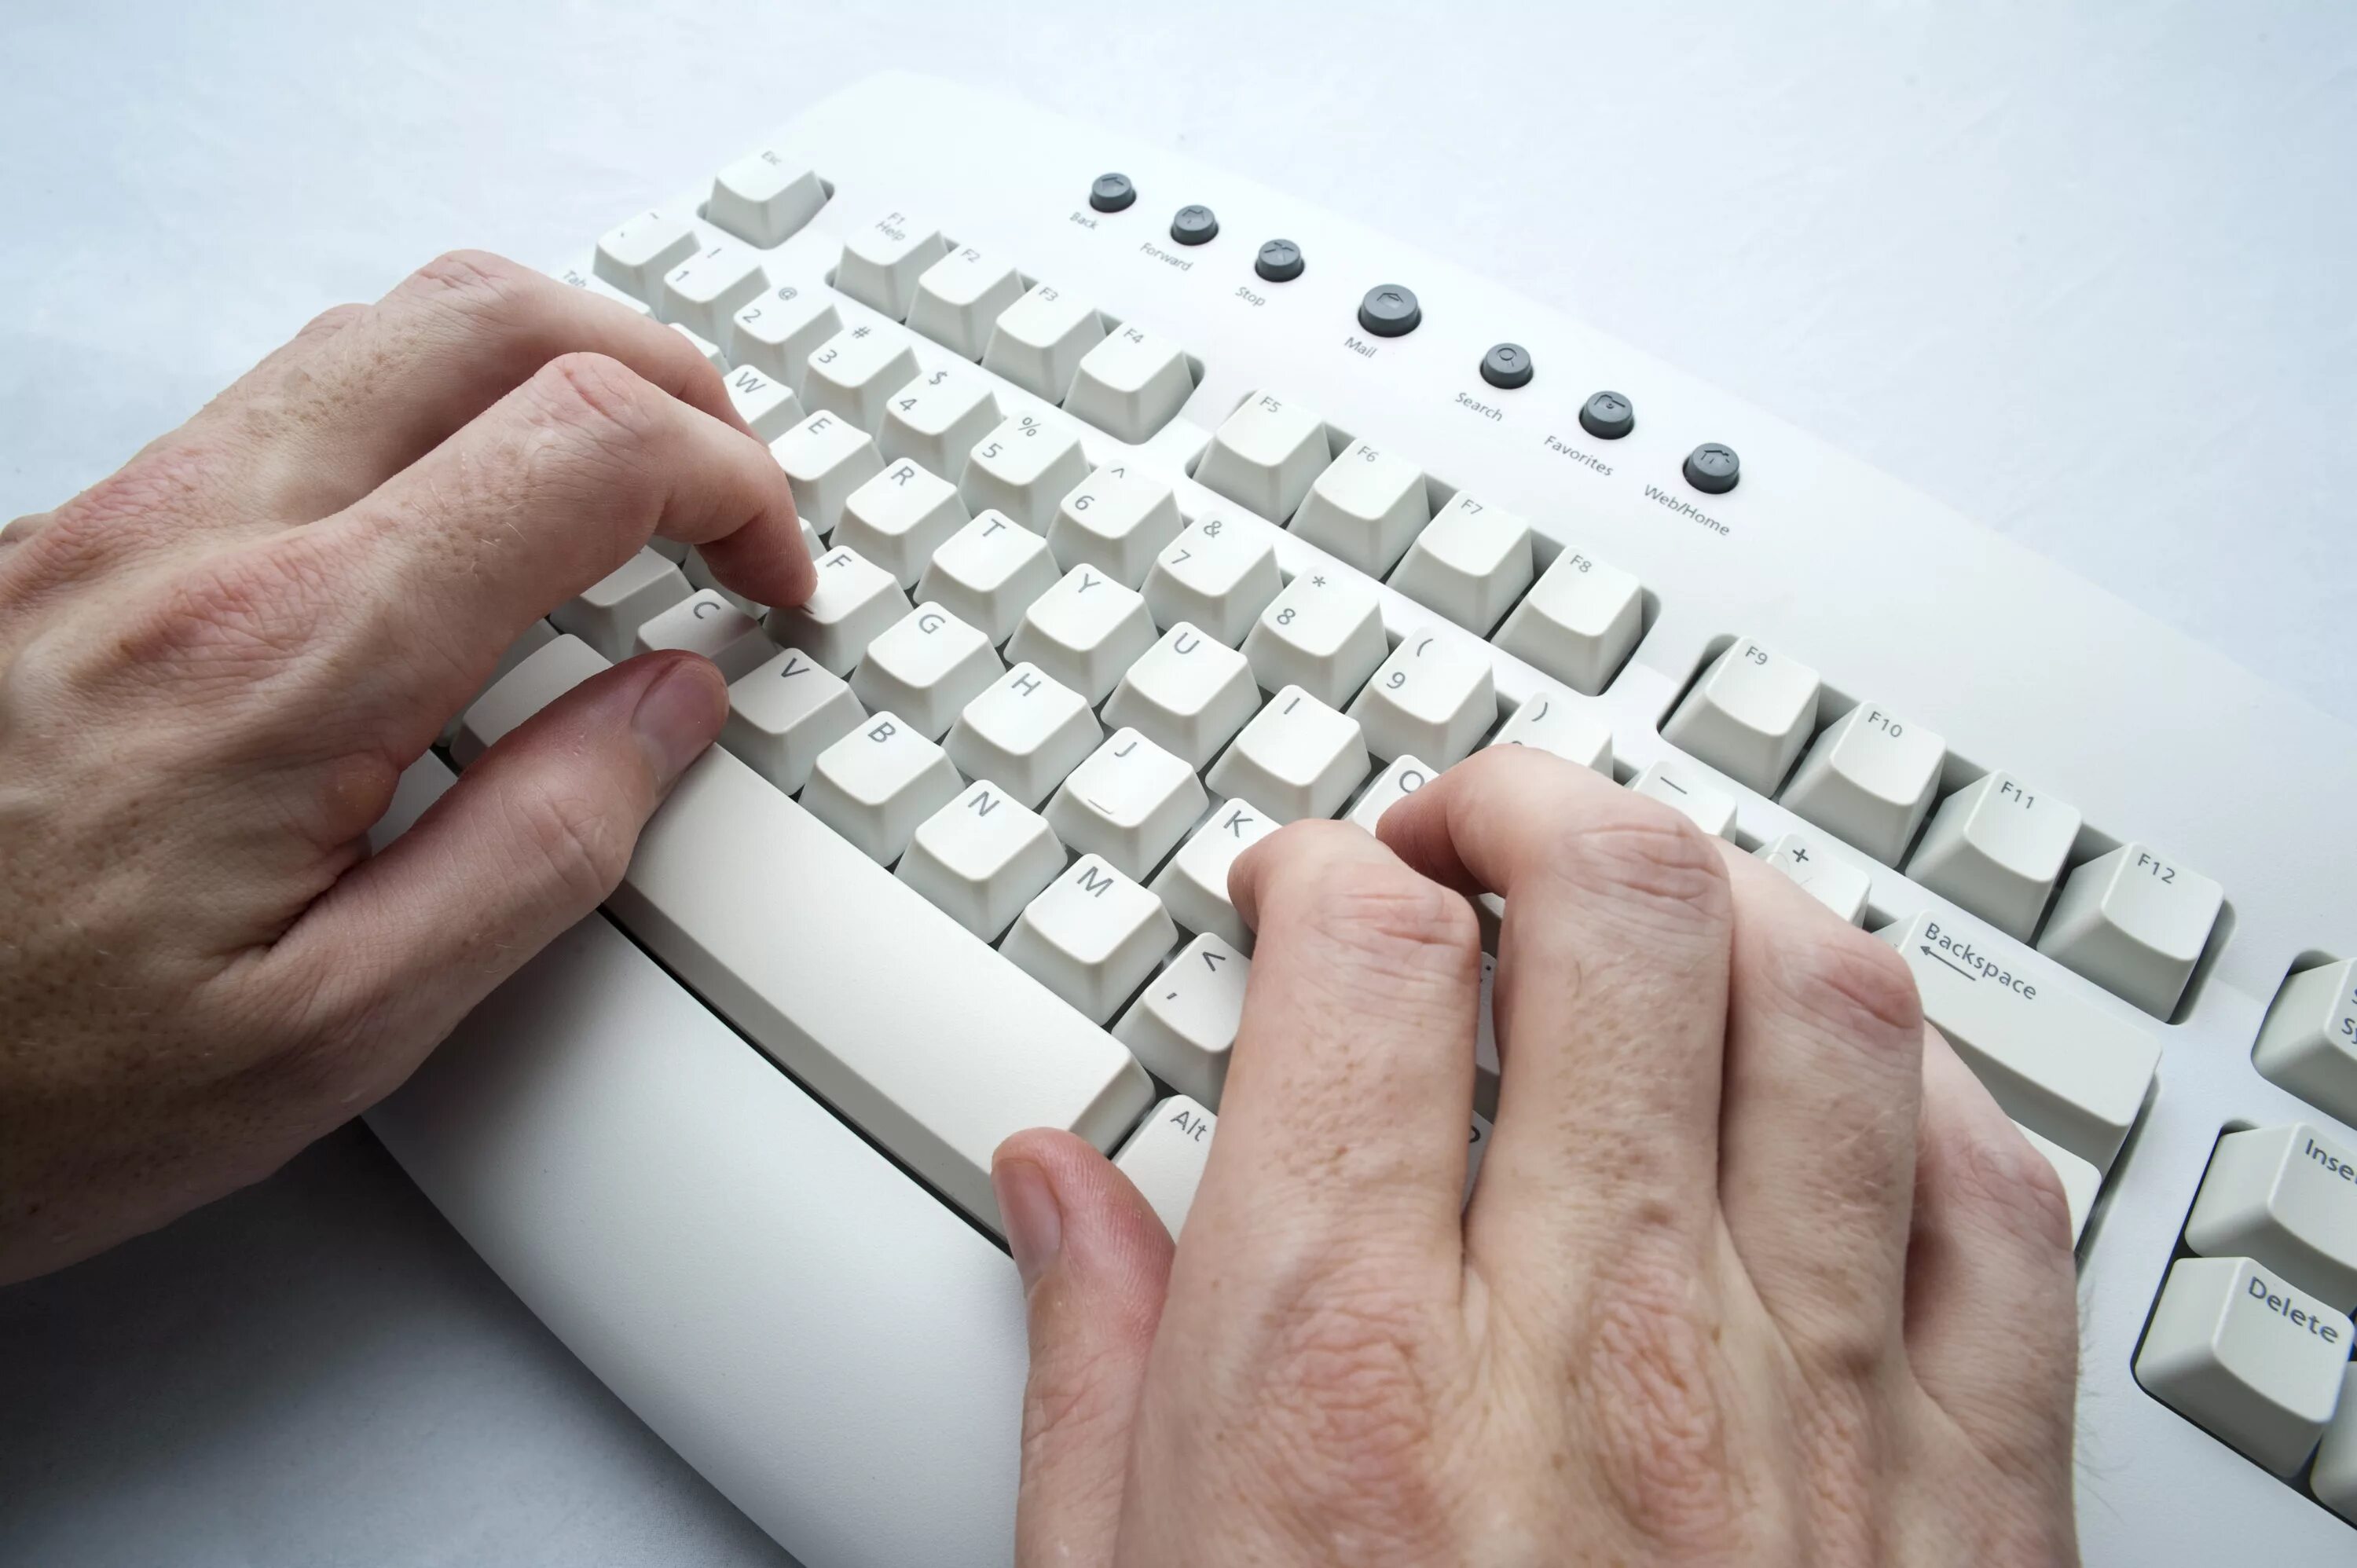 Тайпинг клавиатуры. Руки на клавиатуре. Печатает на клавиатуре. Руки программиста на клавиатуре. СПИД клавиатура.